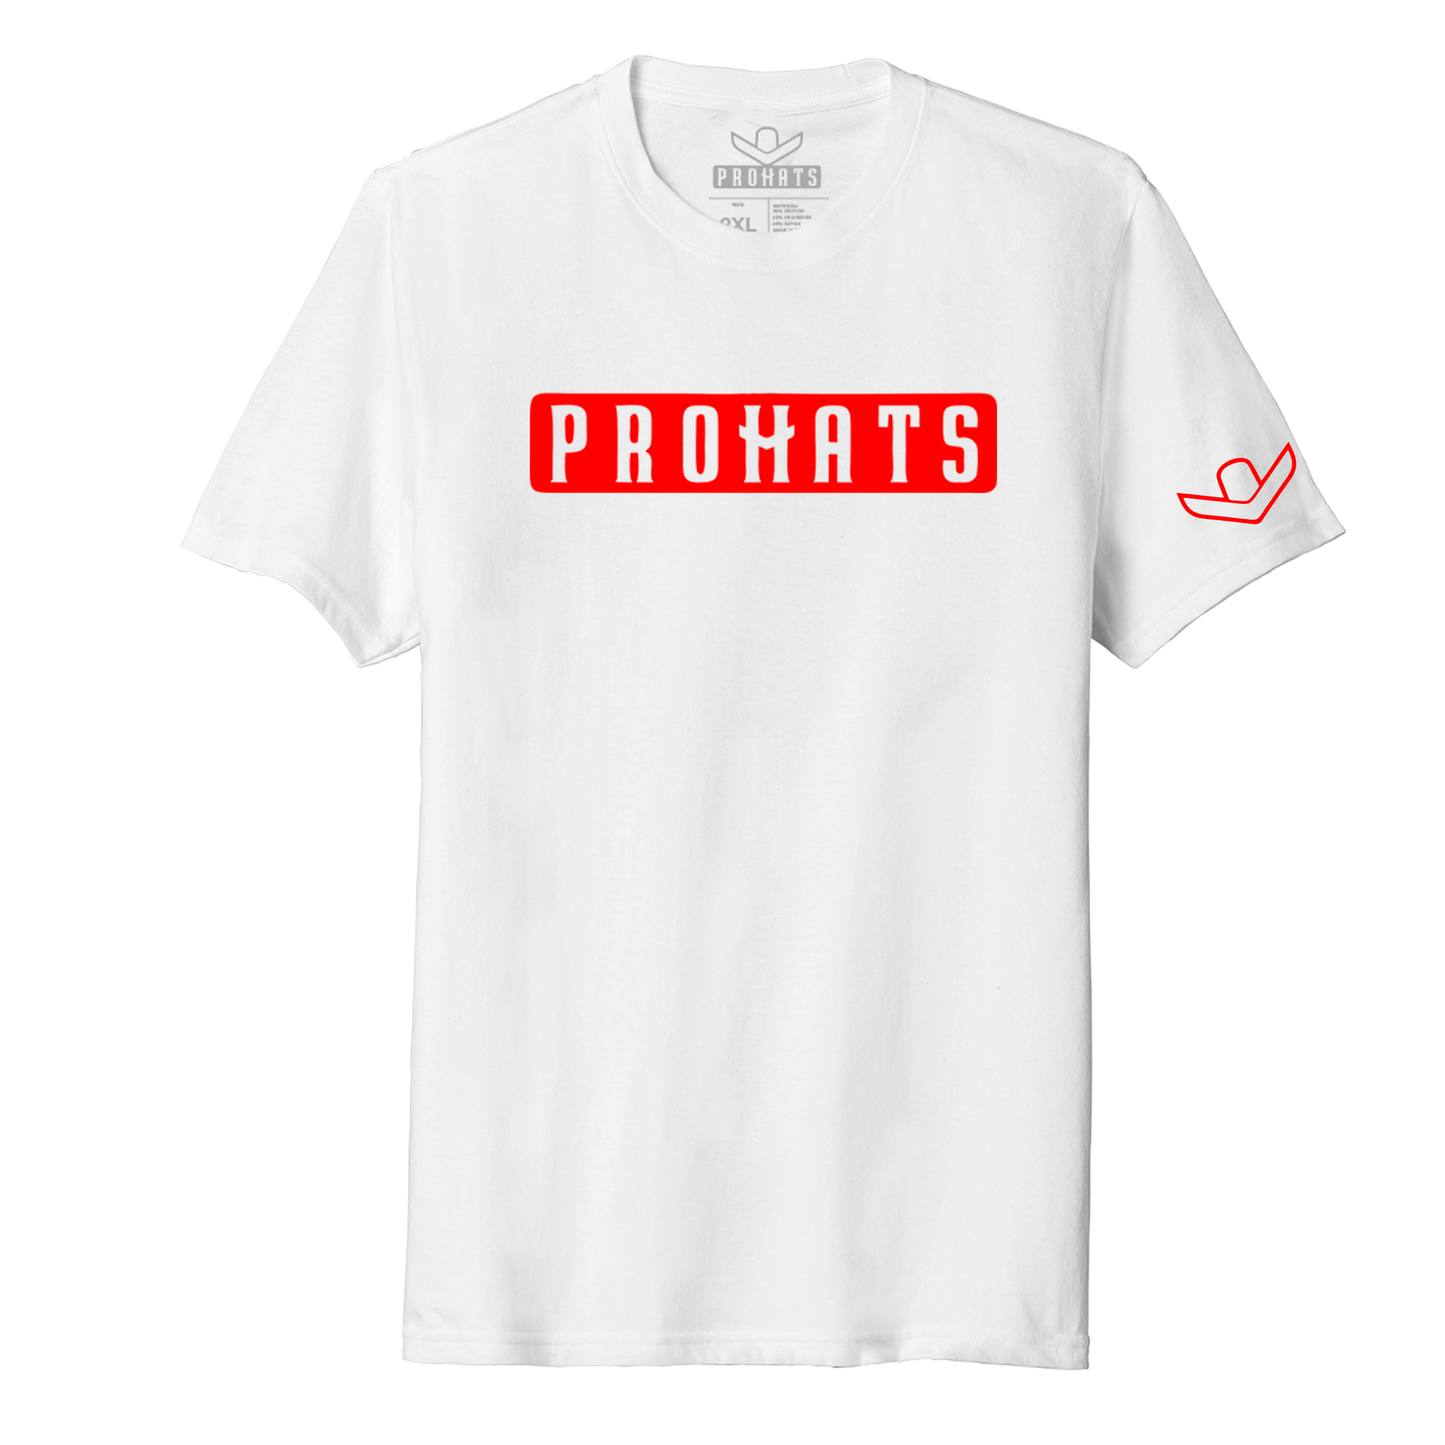 PROHATS T-Shirt